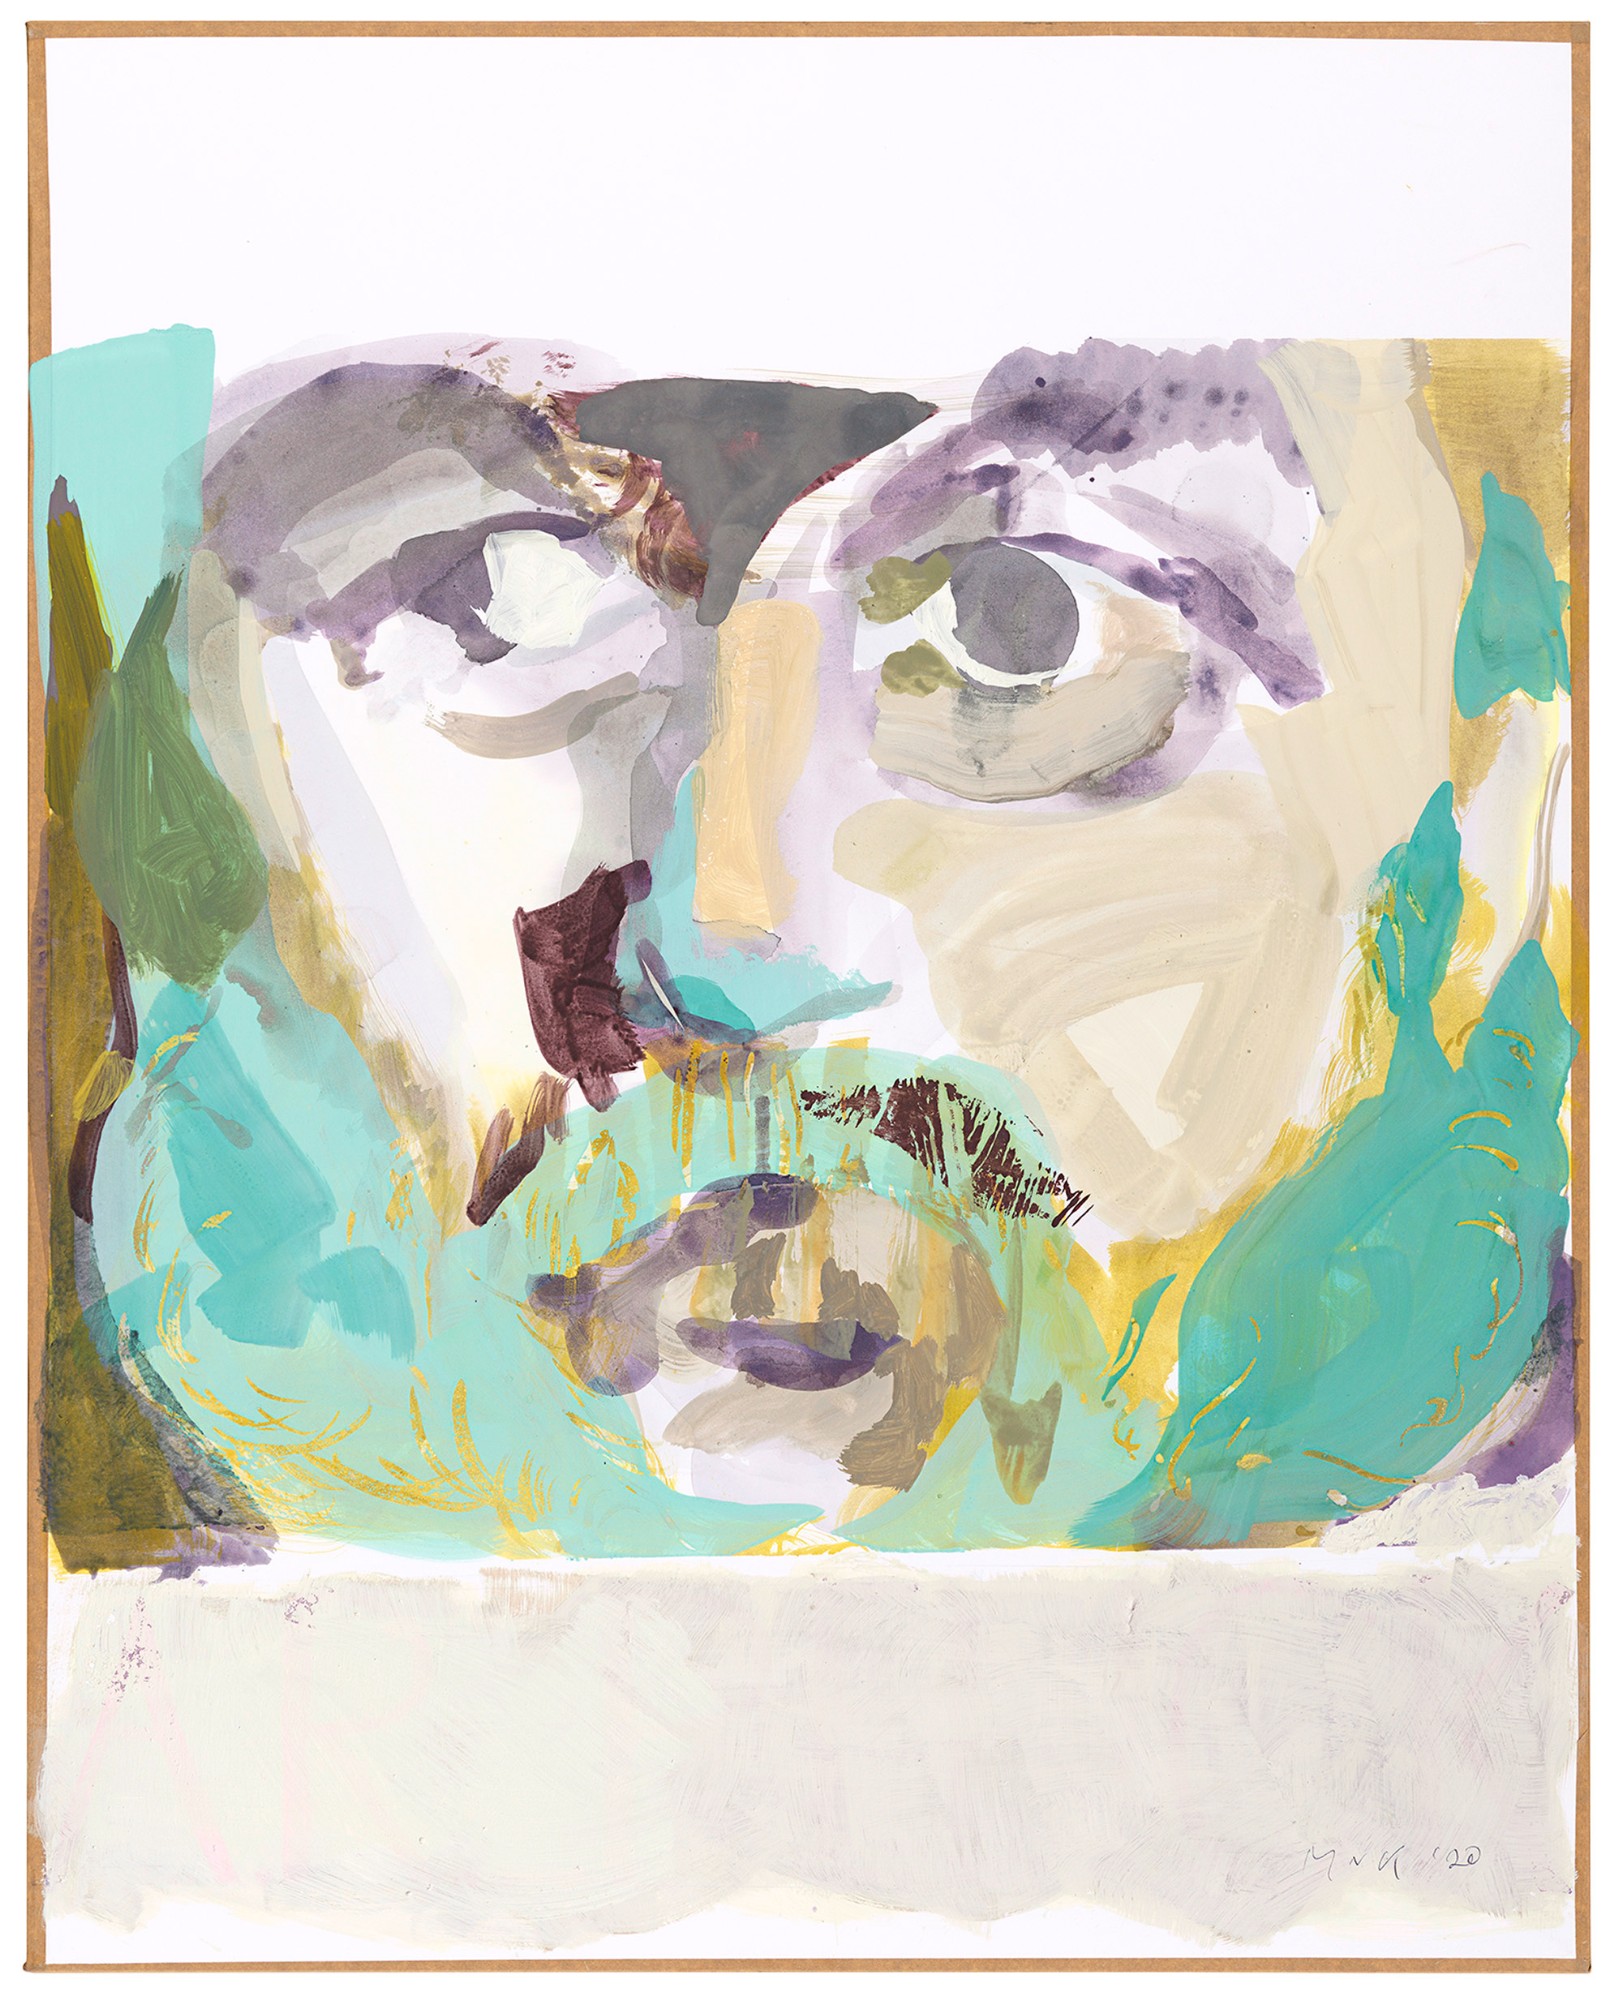 Maki Na Kamura, arpenck, 2020, water and oil on paper, 100 x 80 cm